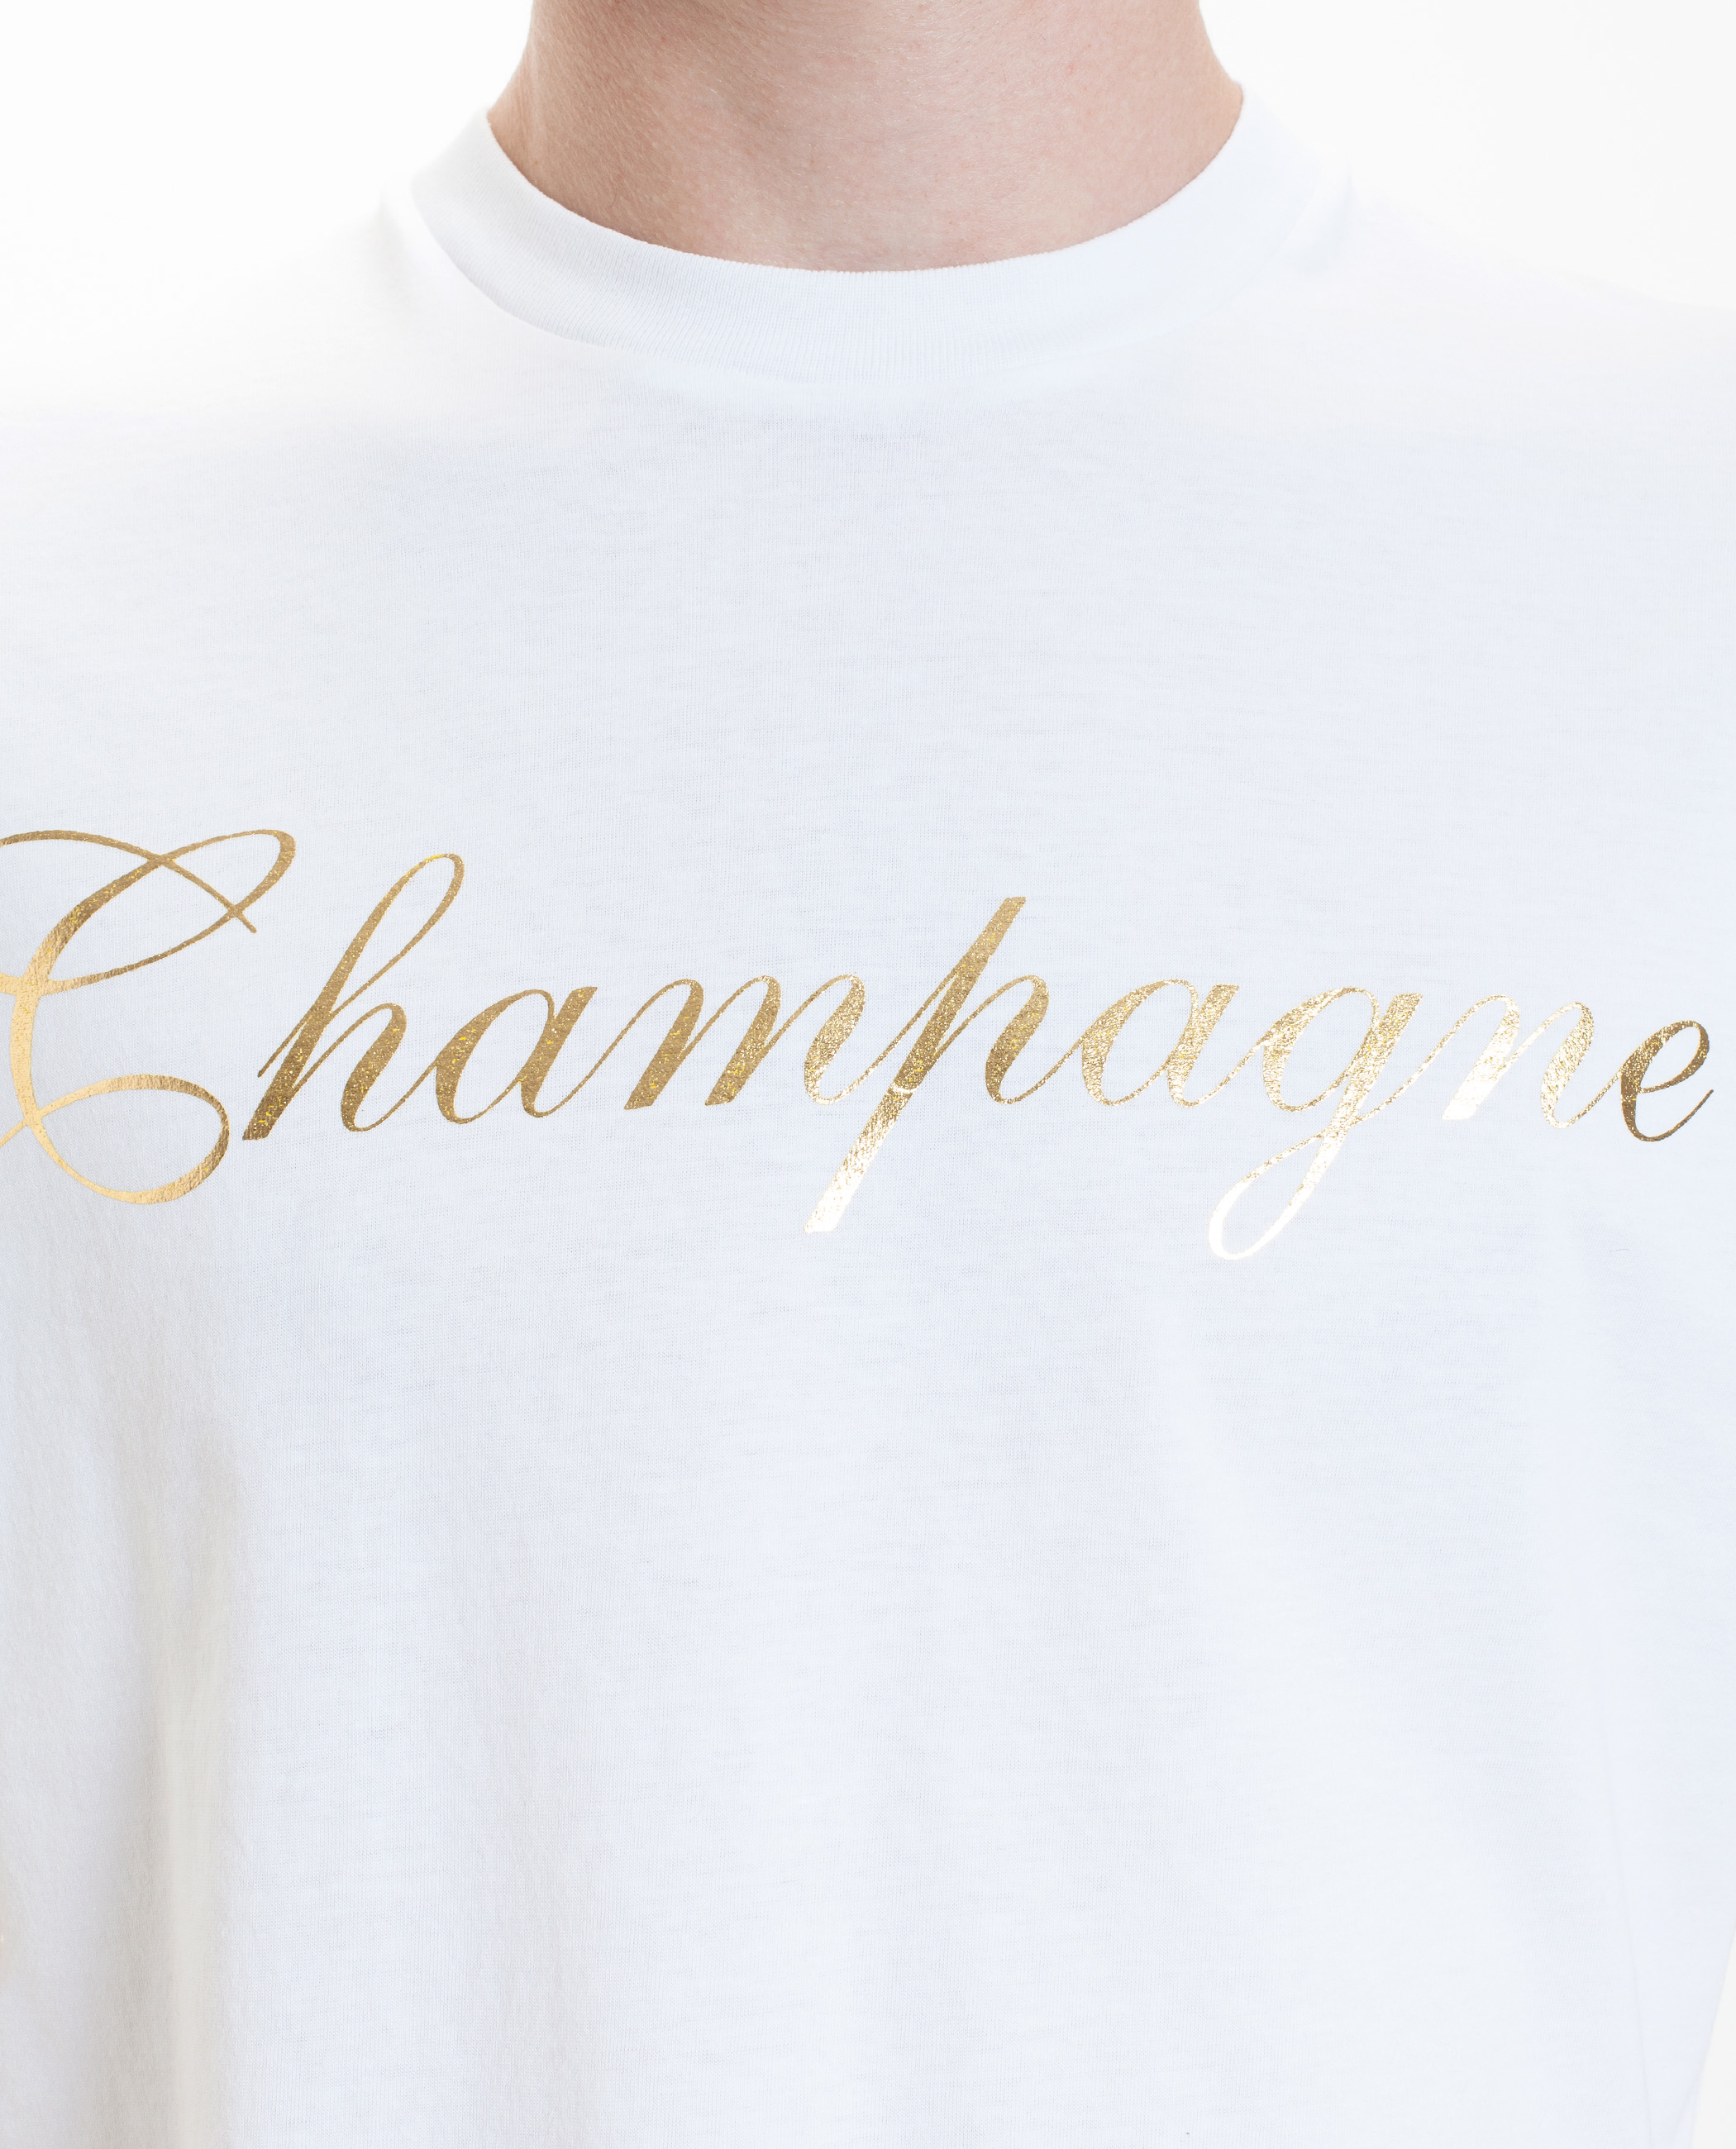 dsquared2 champagne t shirt